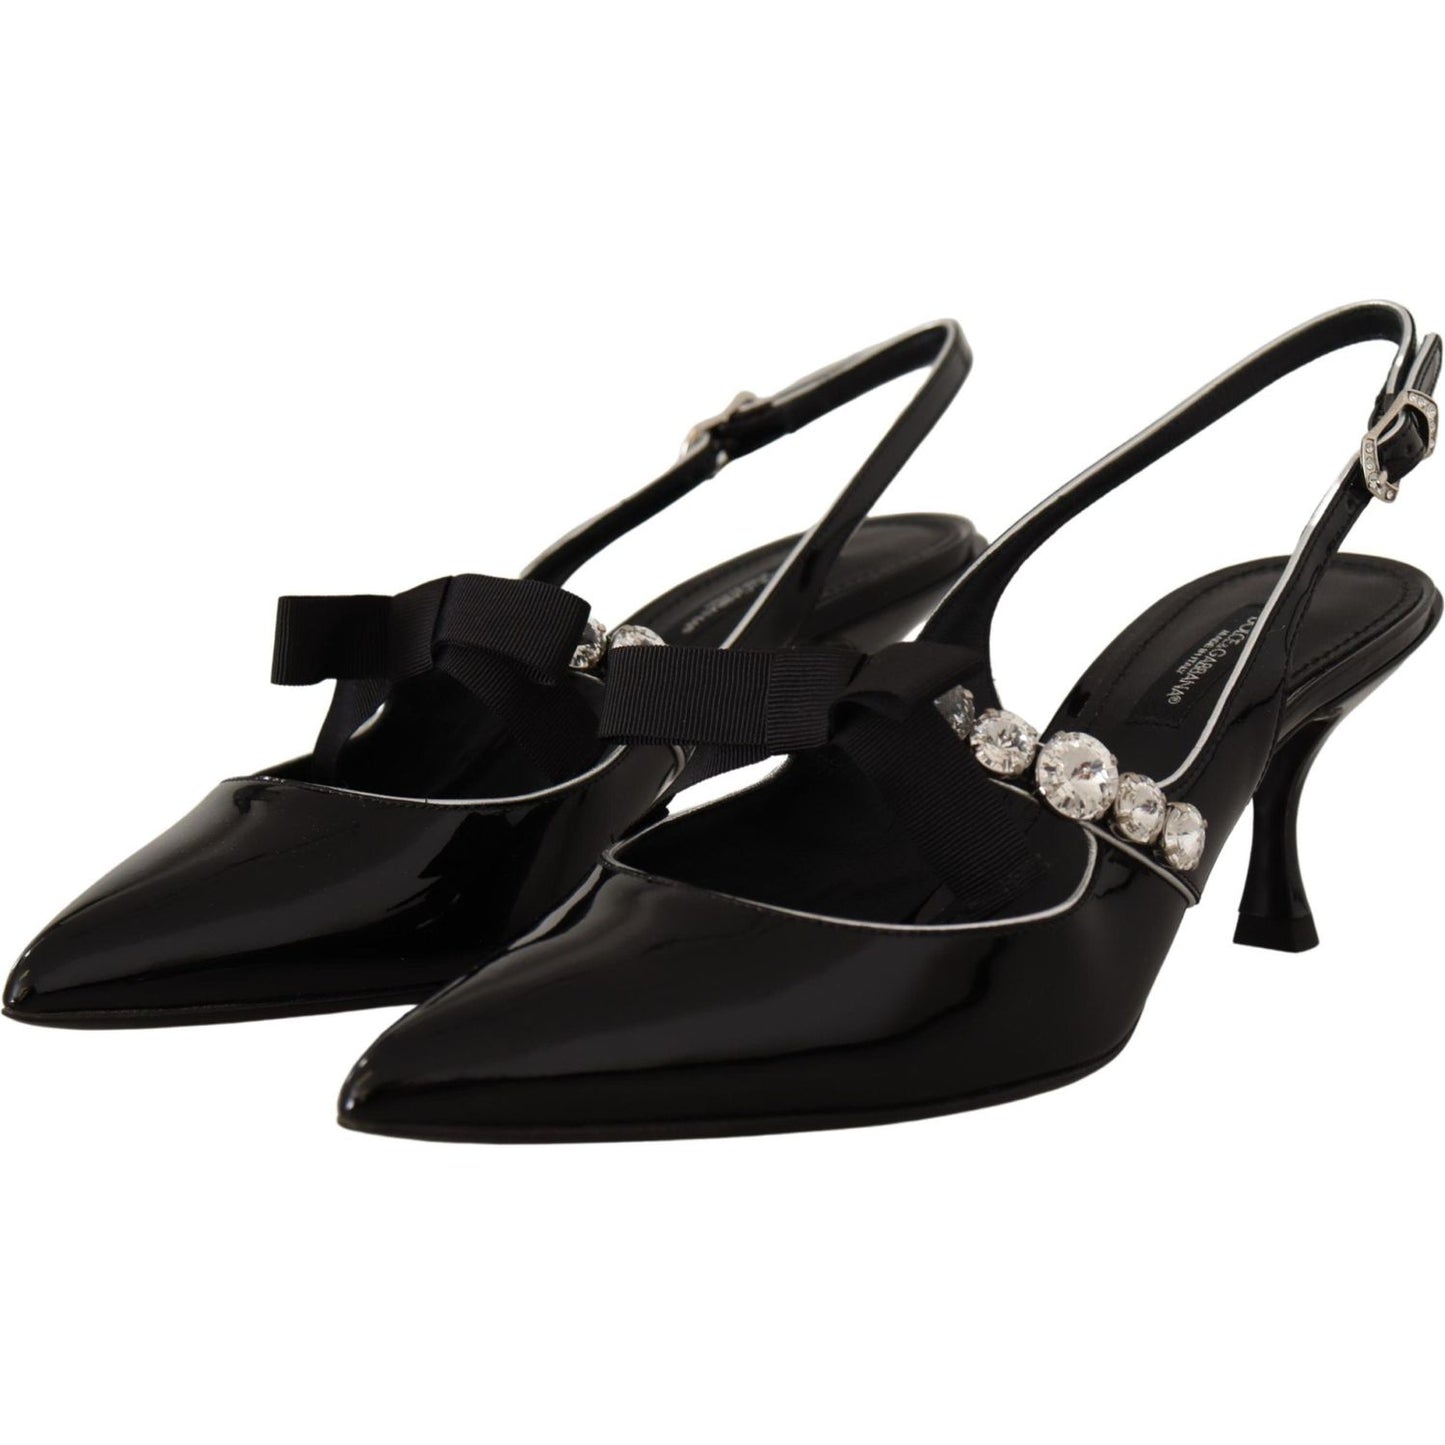 Dolce & Gabbana Elegant Crystal Slingback Heels Pump black-patent-leather-crystal-slingbacks-shoes